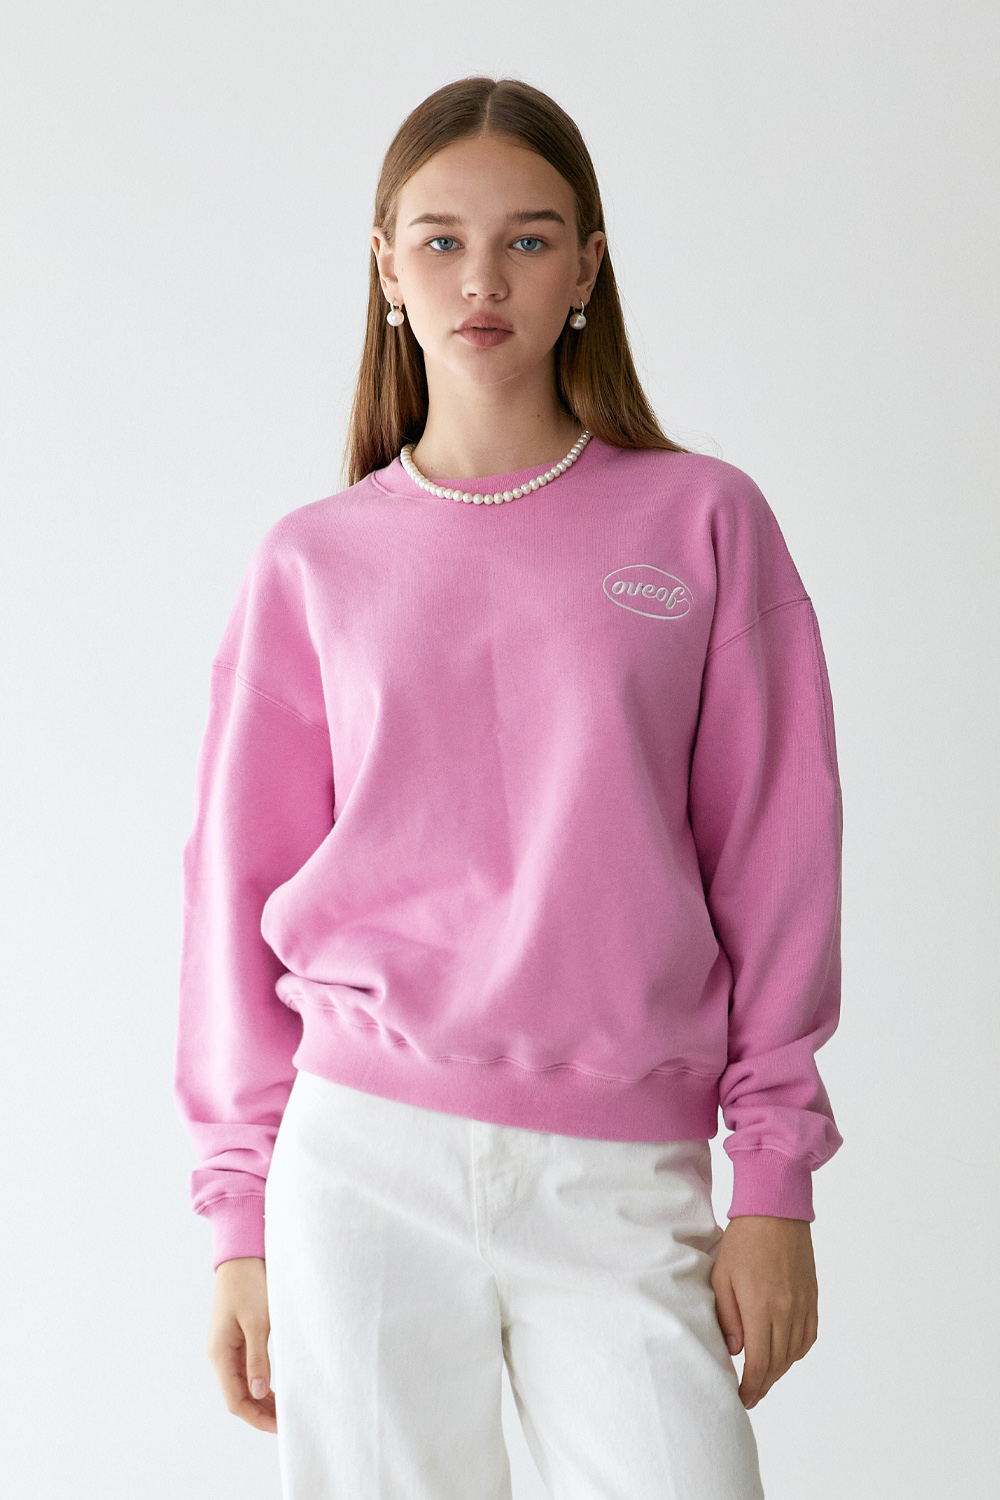 Niddle sweatshirts_pink